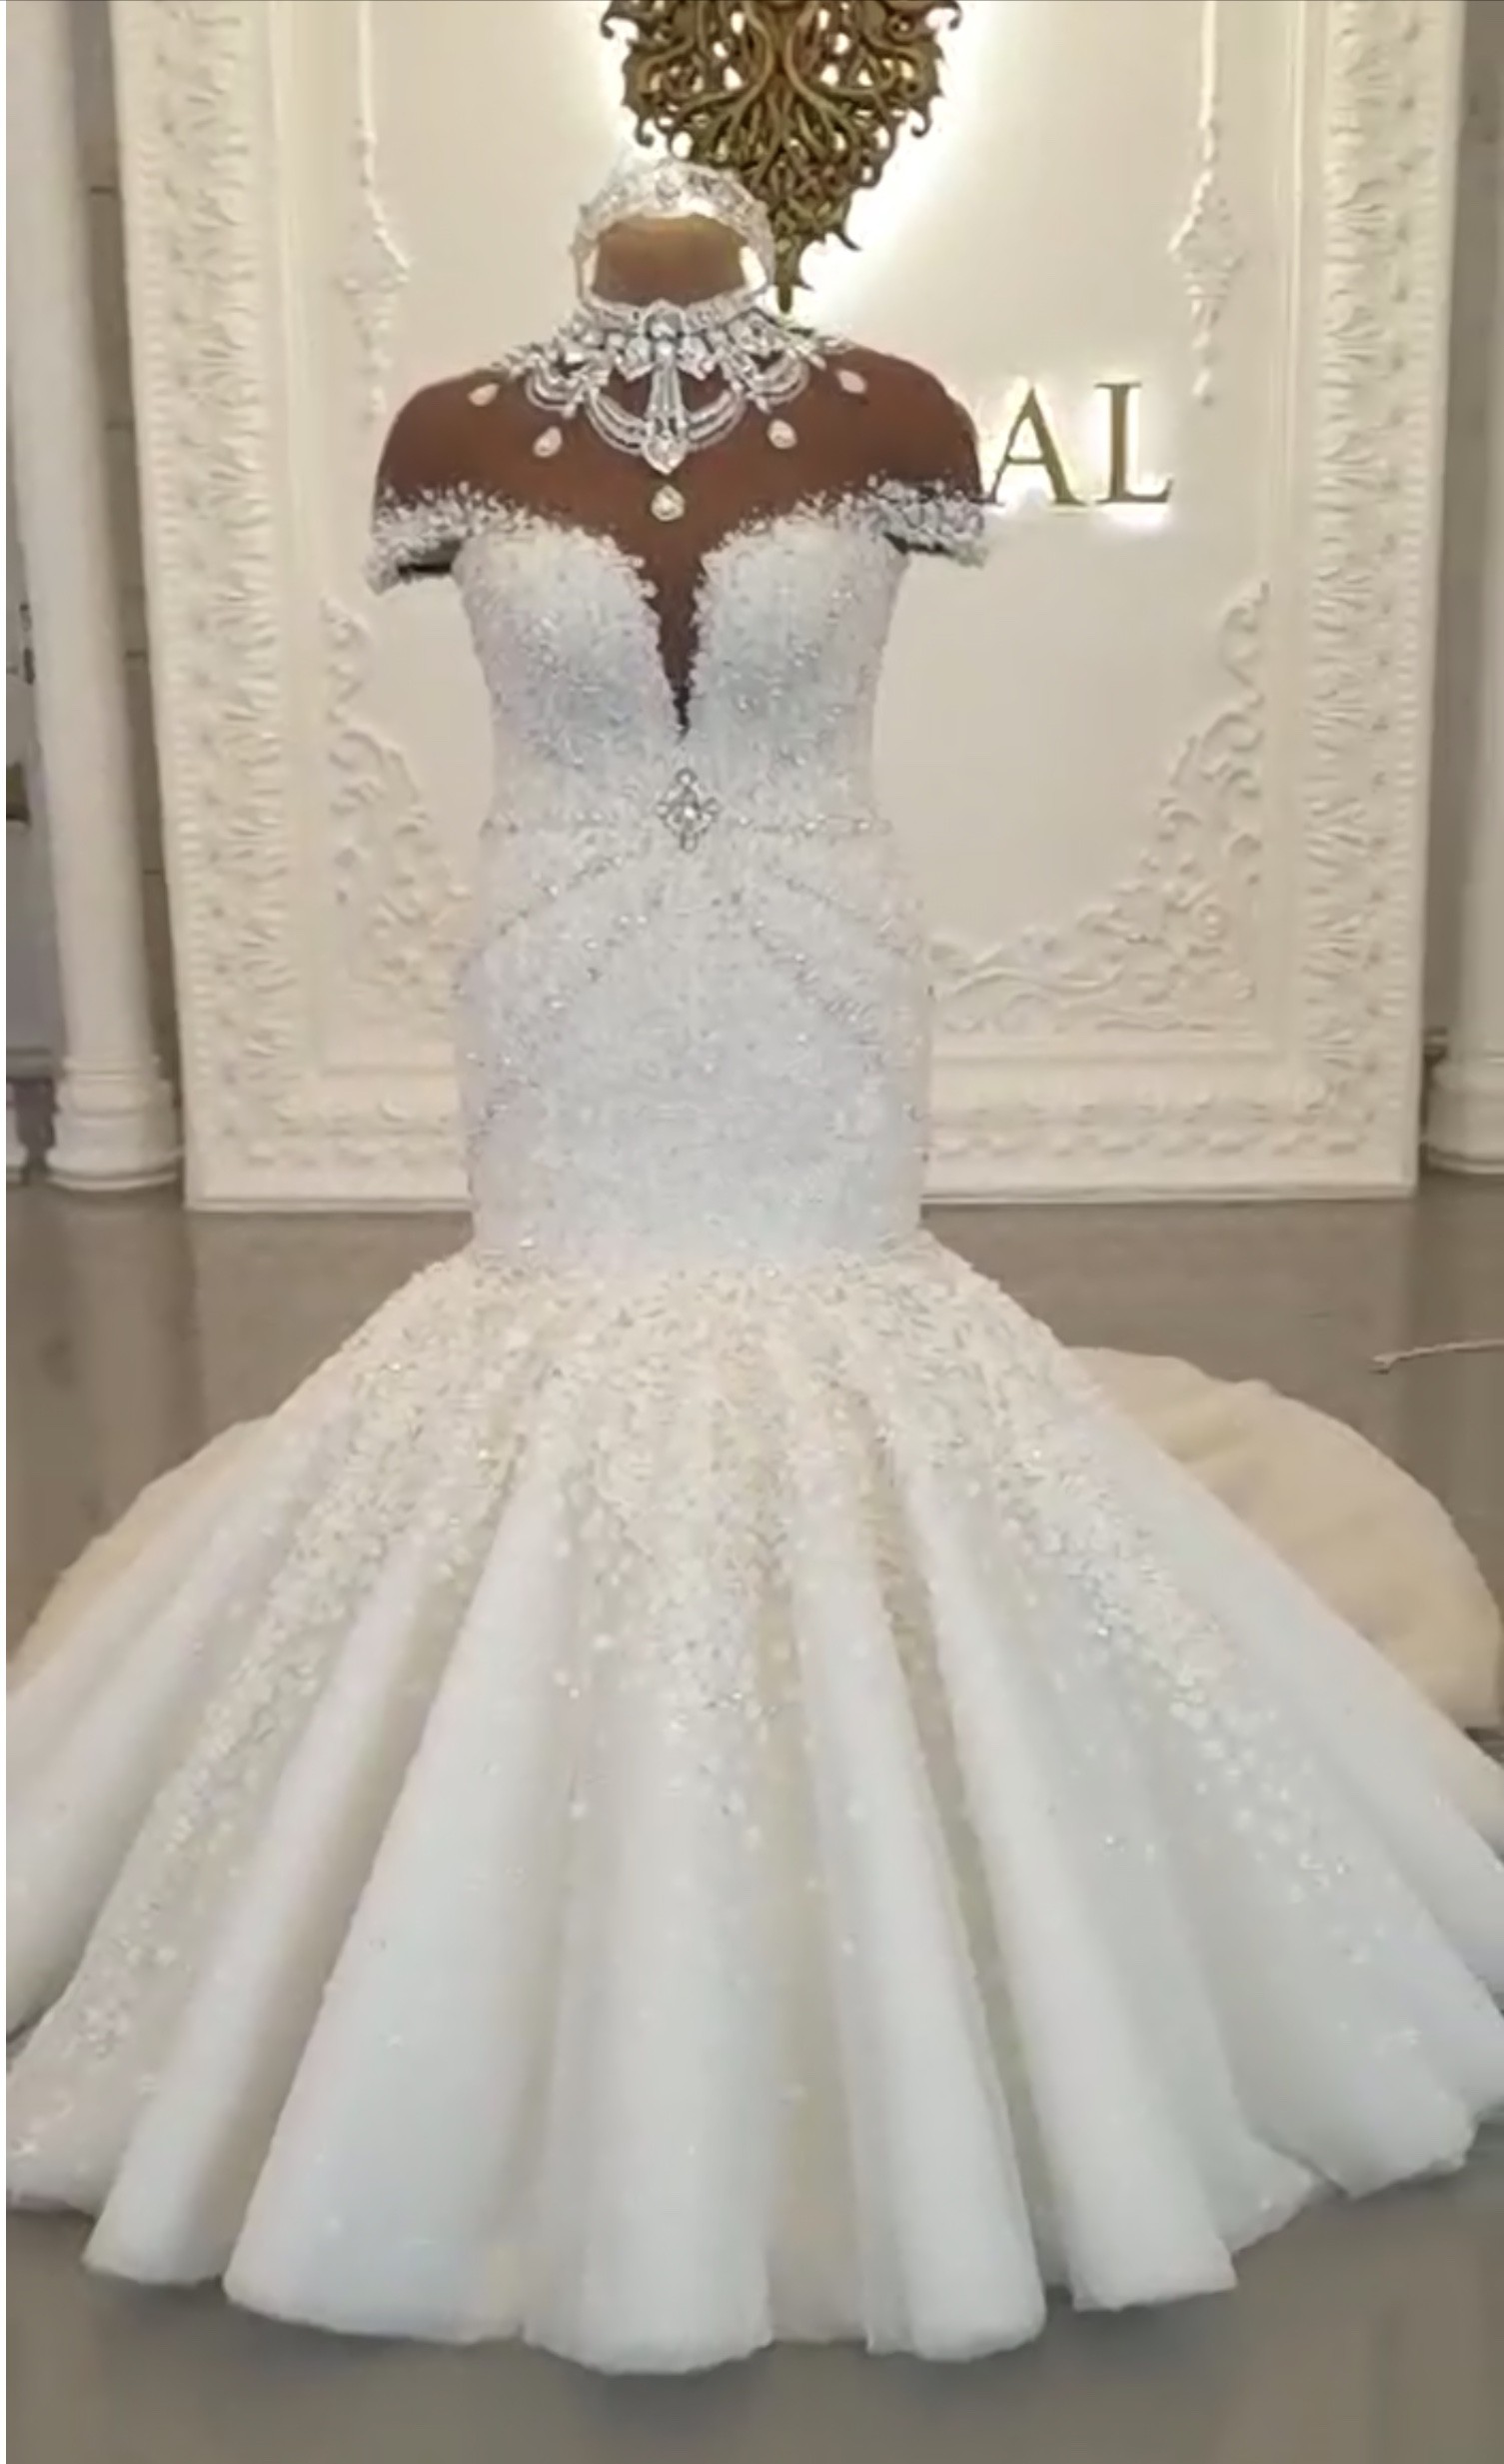 Leo Almodal Custom-made Preowned Wedding Dress - Stillwhite